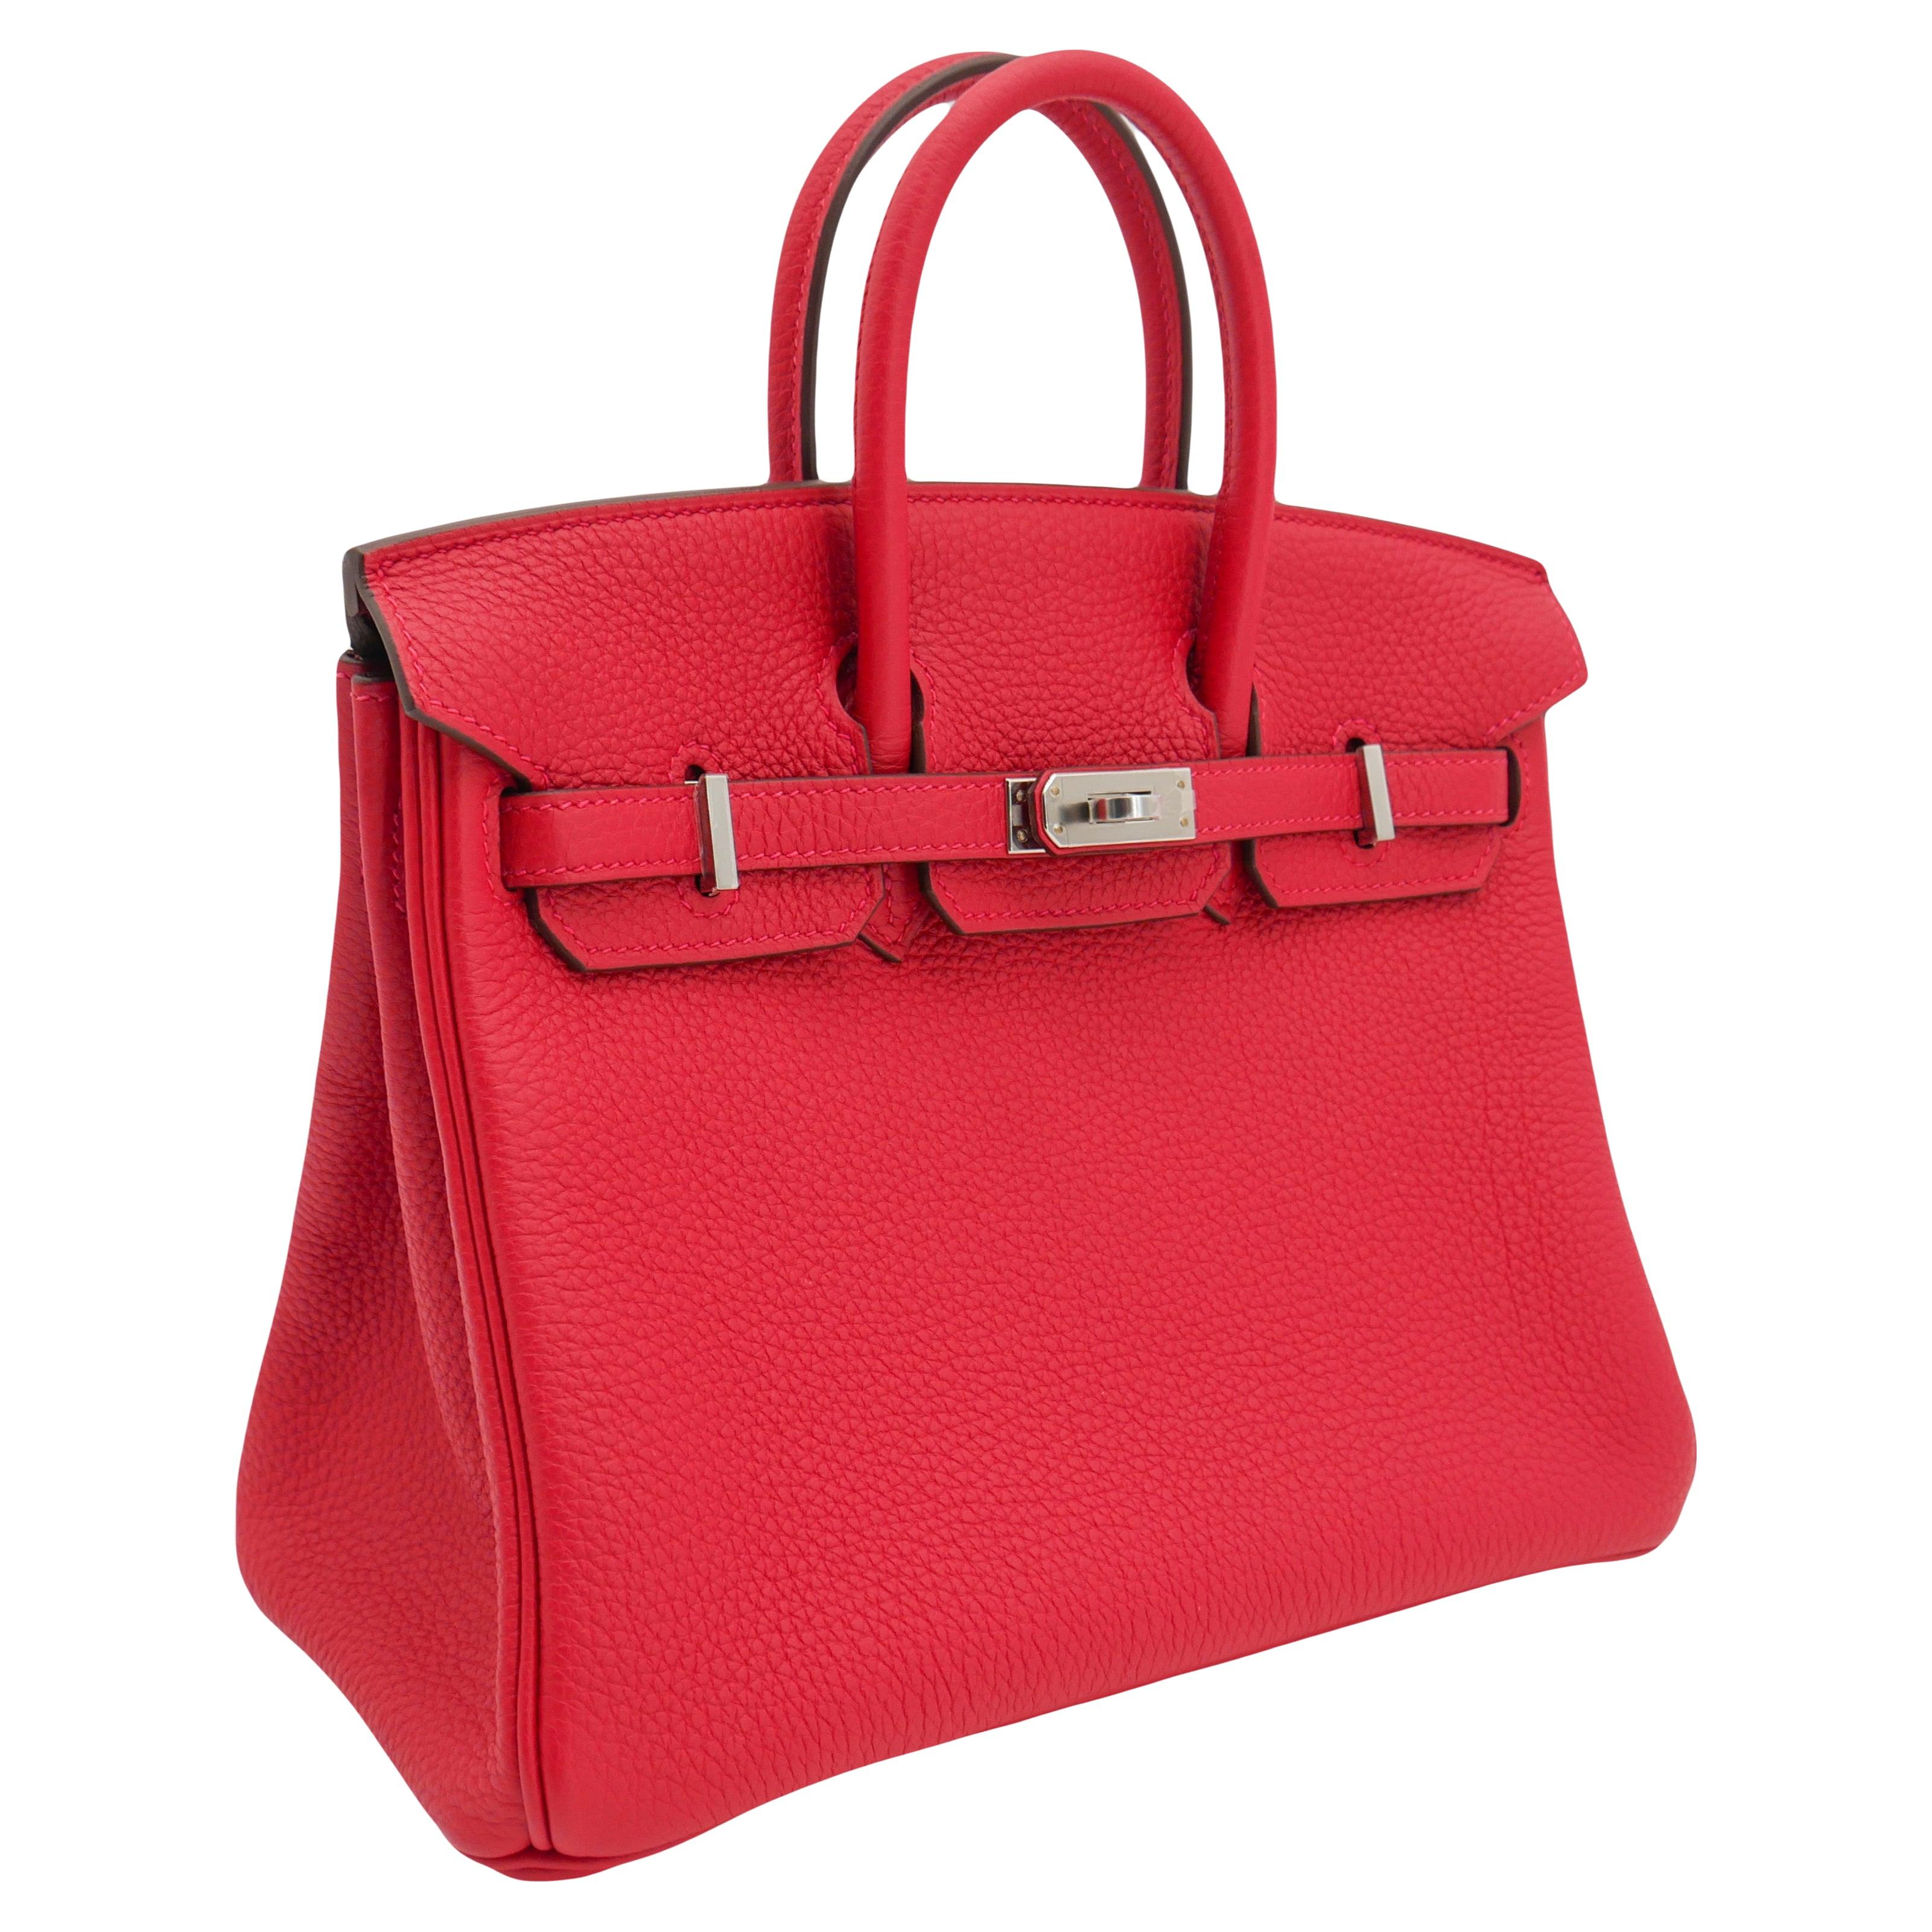 Brand: Hermès
Style: Birkin Verso
Size: 25cm
Color: Rouge Casaque
Material: Togo Leather
Hardware: Palladium (PHW)
Dimensions: 10